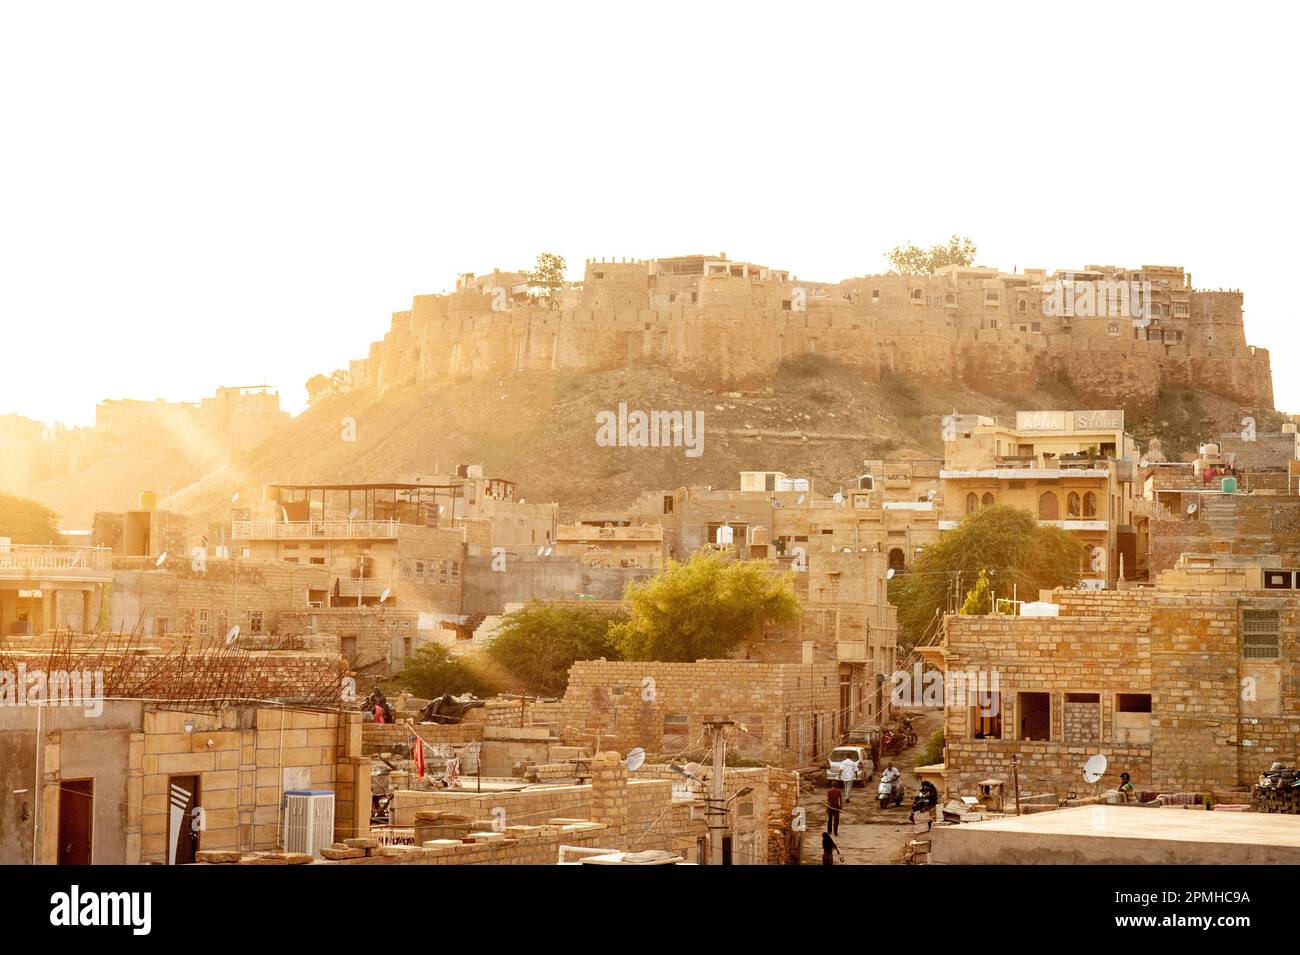 Jaisalmer desert town life, India Stock Photo